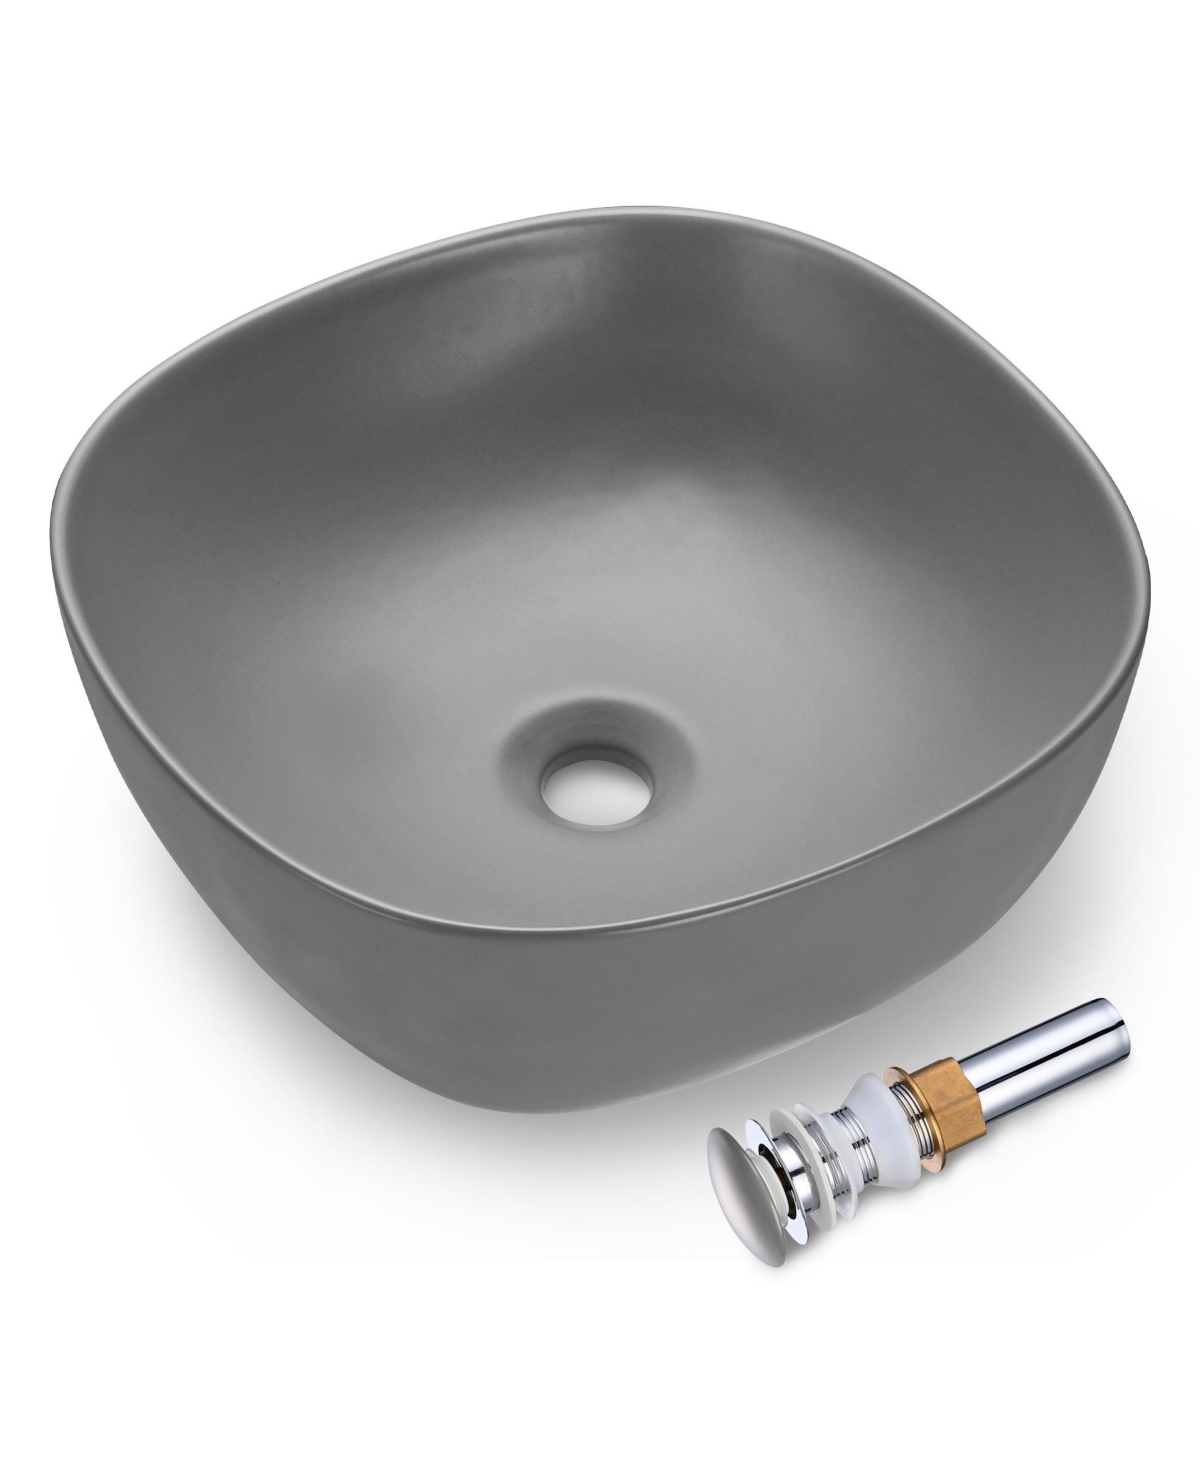 16" Bathroom Ceramic Vessel Sink Countertop Bowl w/ Pop Up Drain Grey - Natural